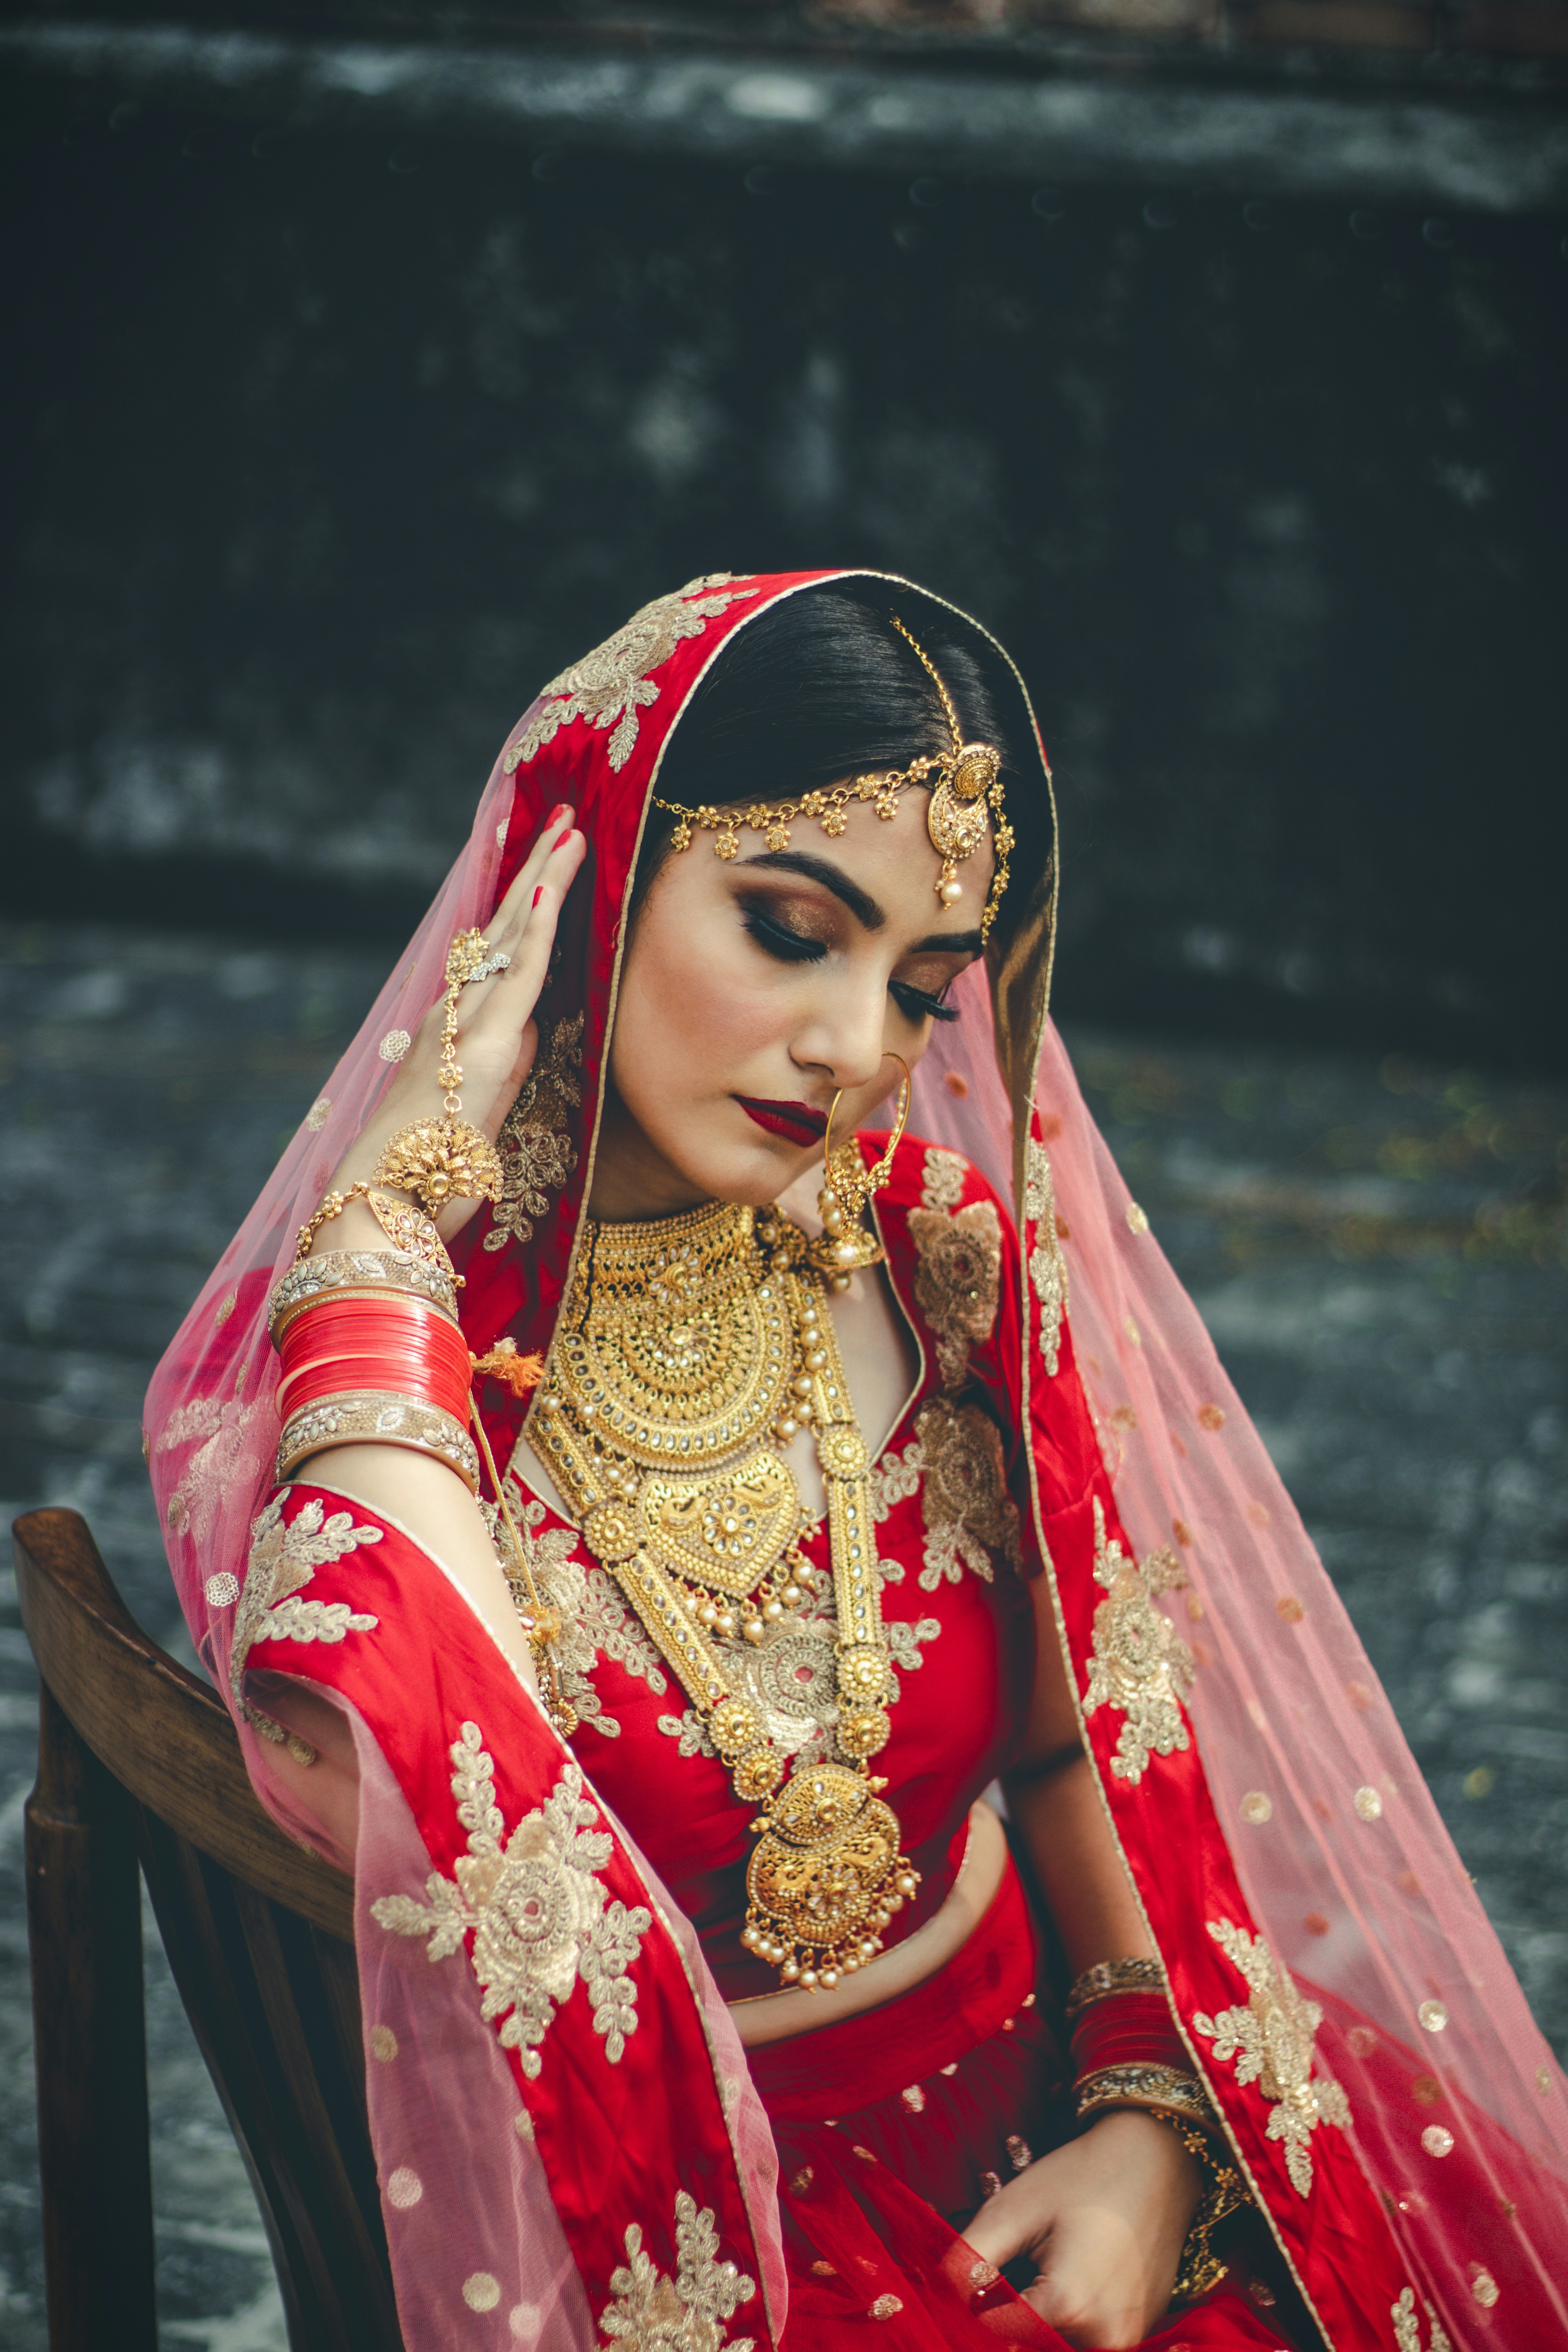 500+ Indian Bride Pictures Download